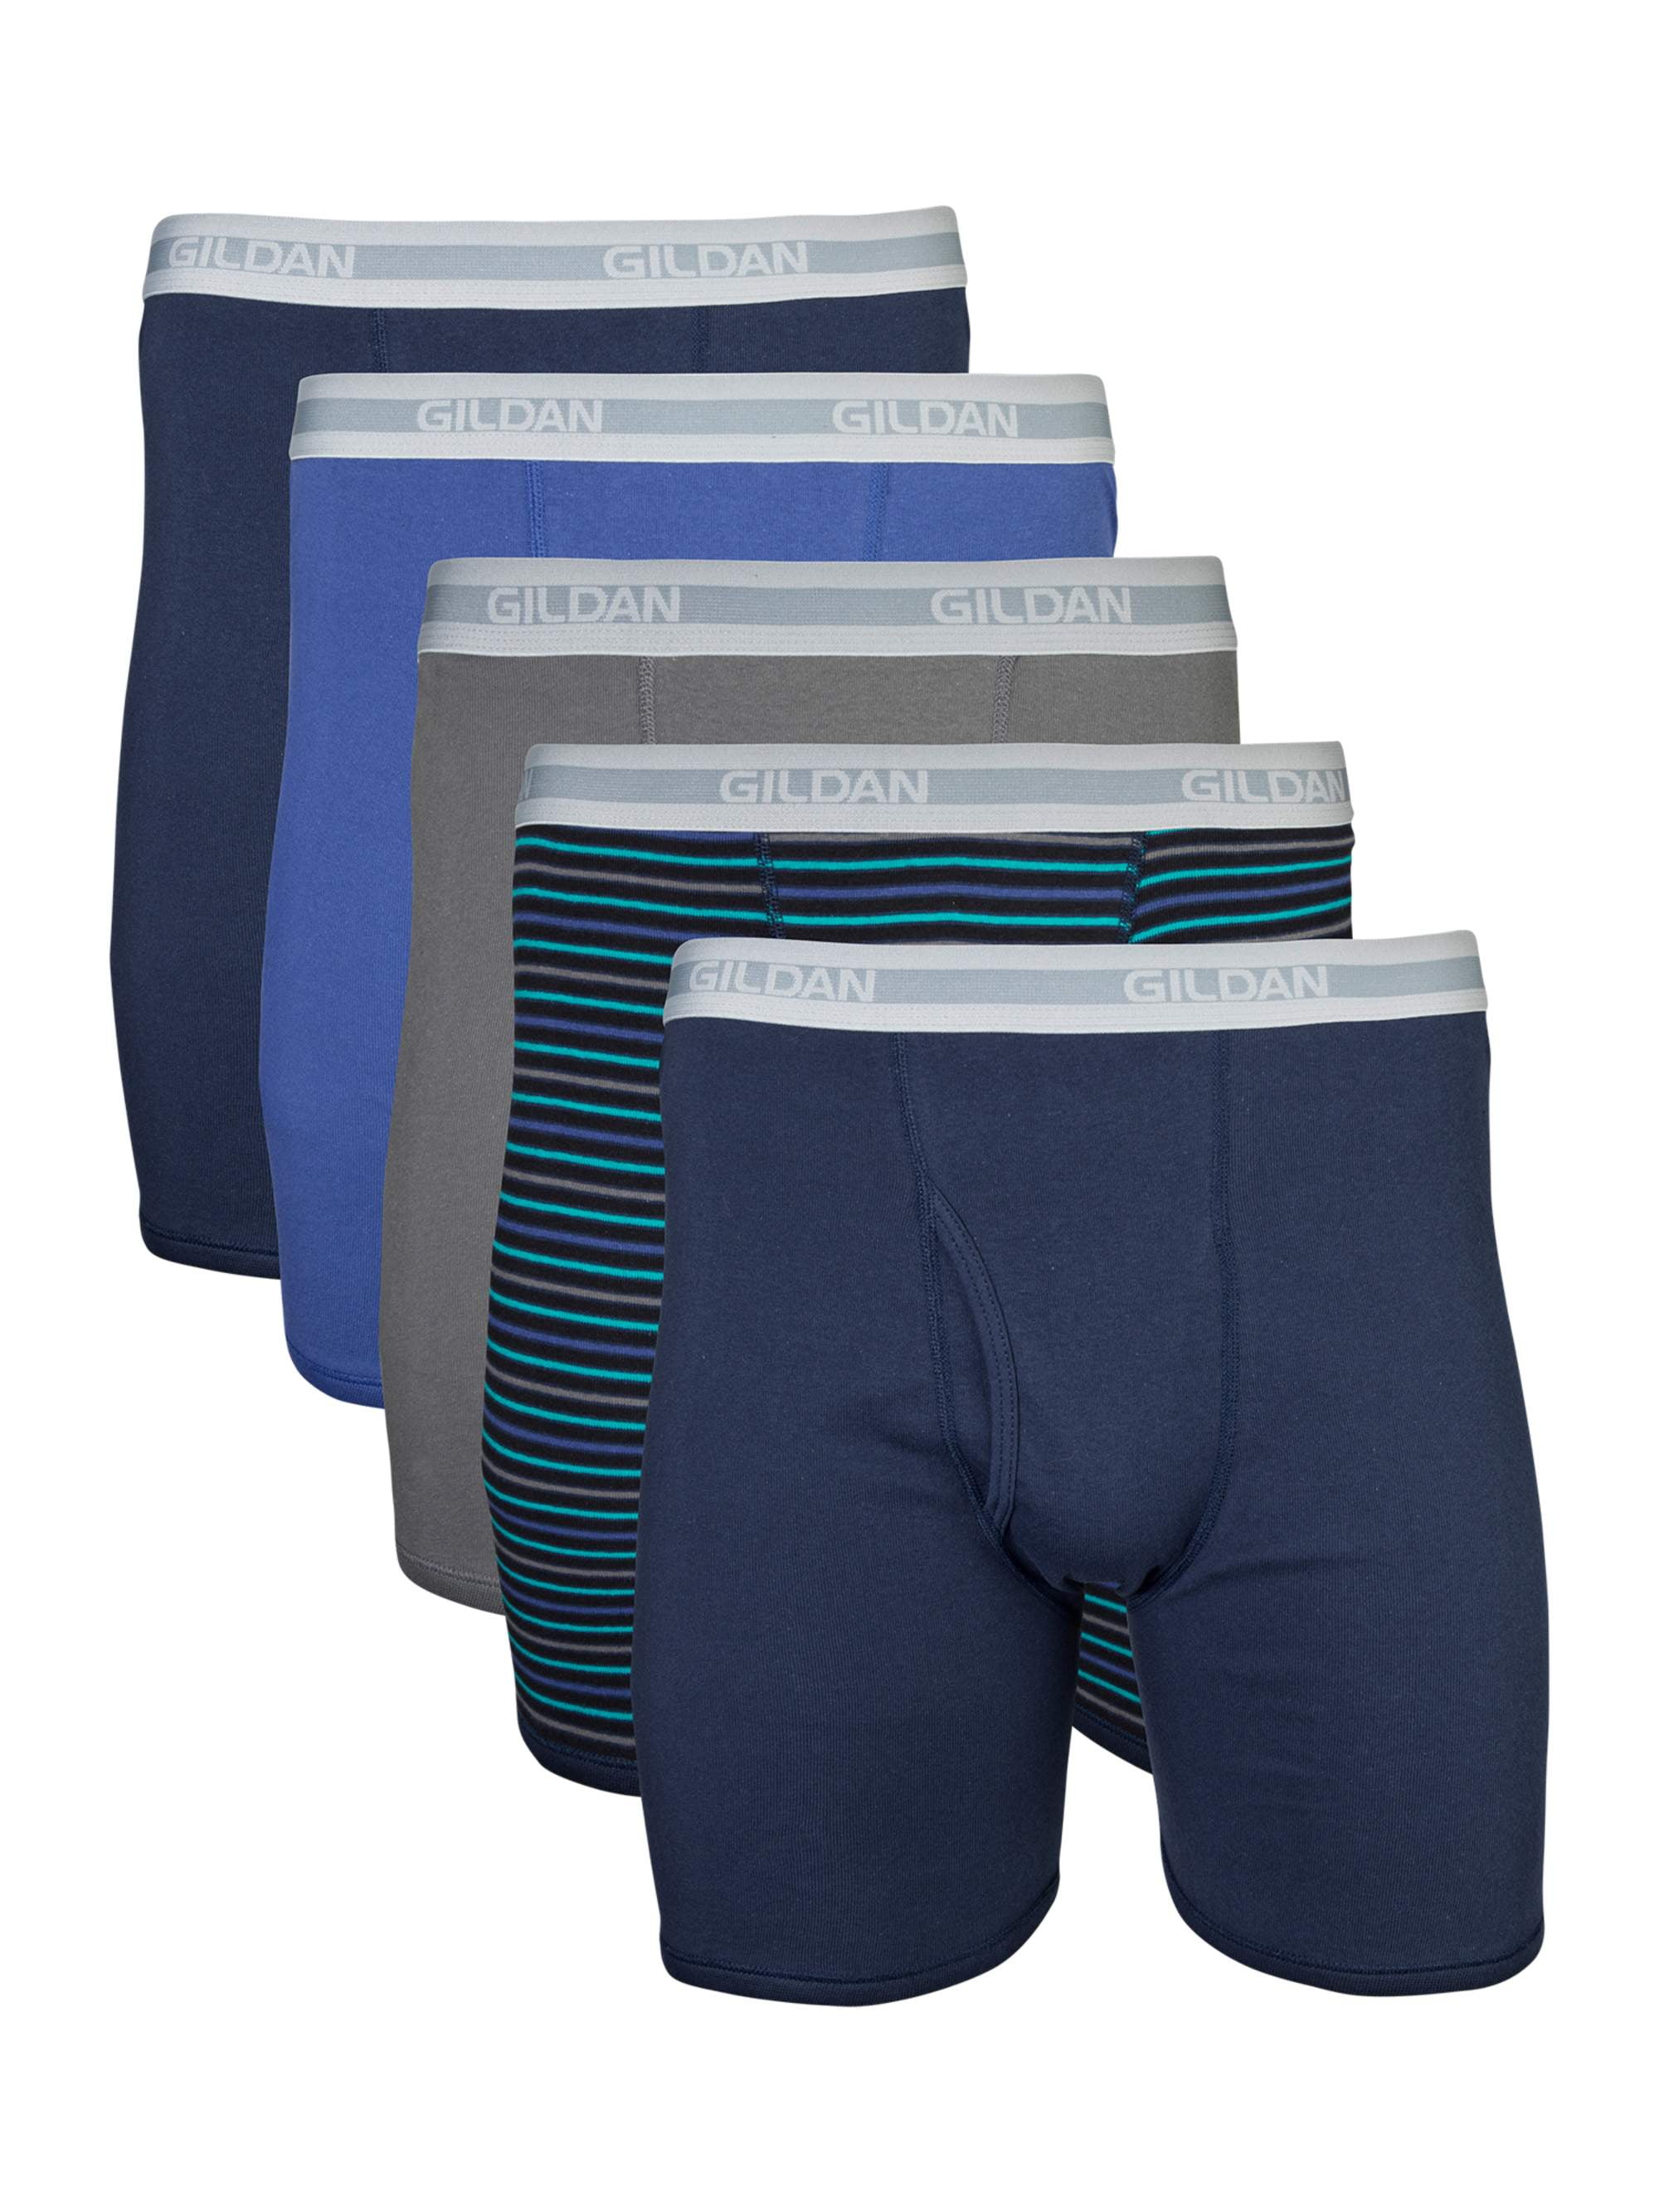 Gildan Adult Men's Regular Leg Boxer Briefs, 5-Pack, Sizes S-2XL, 6 Inseam